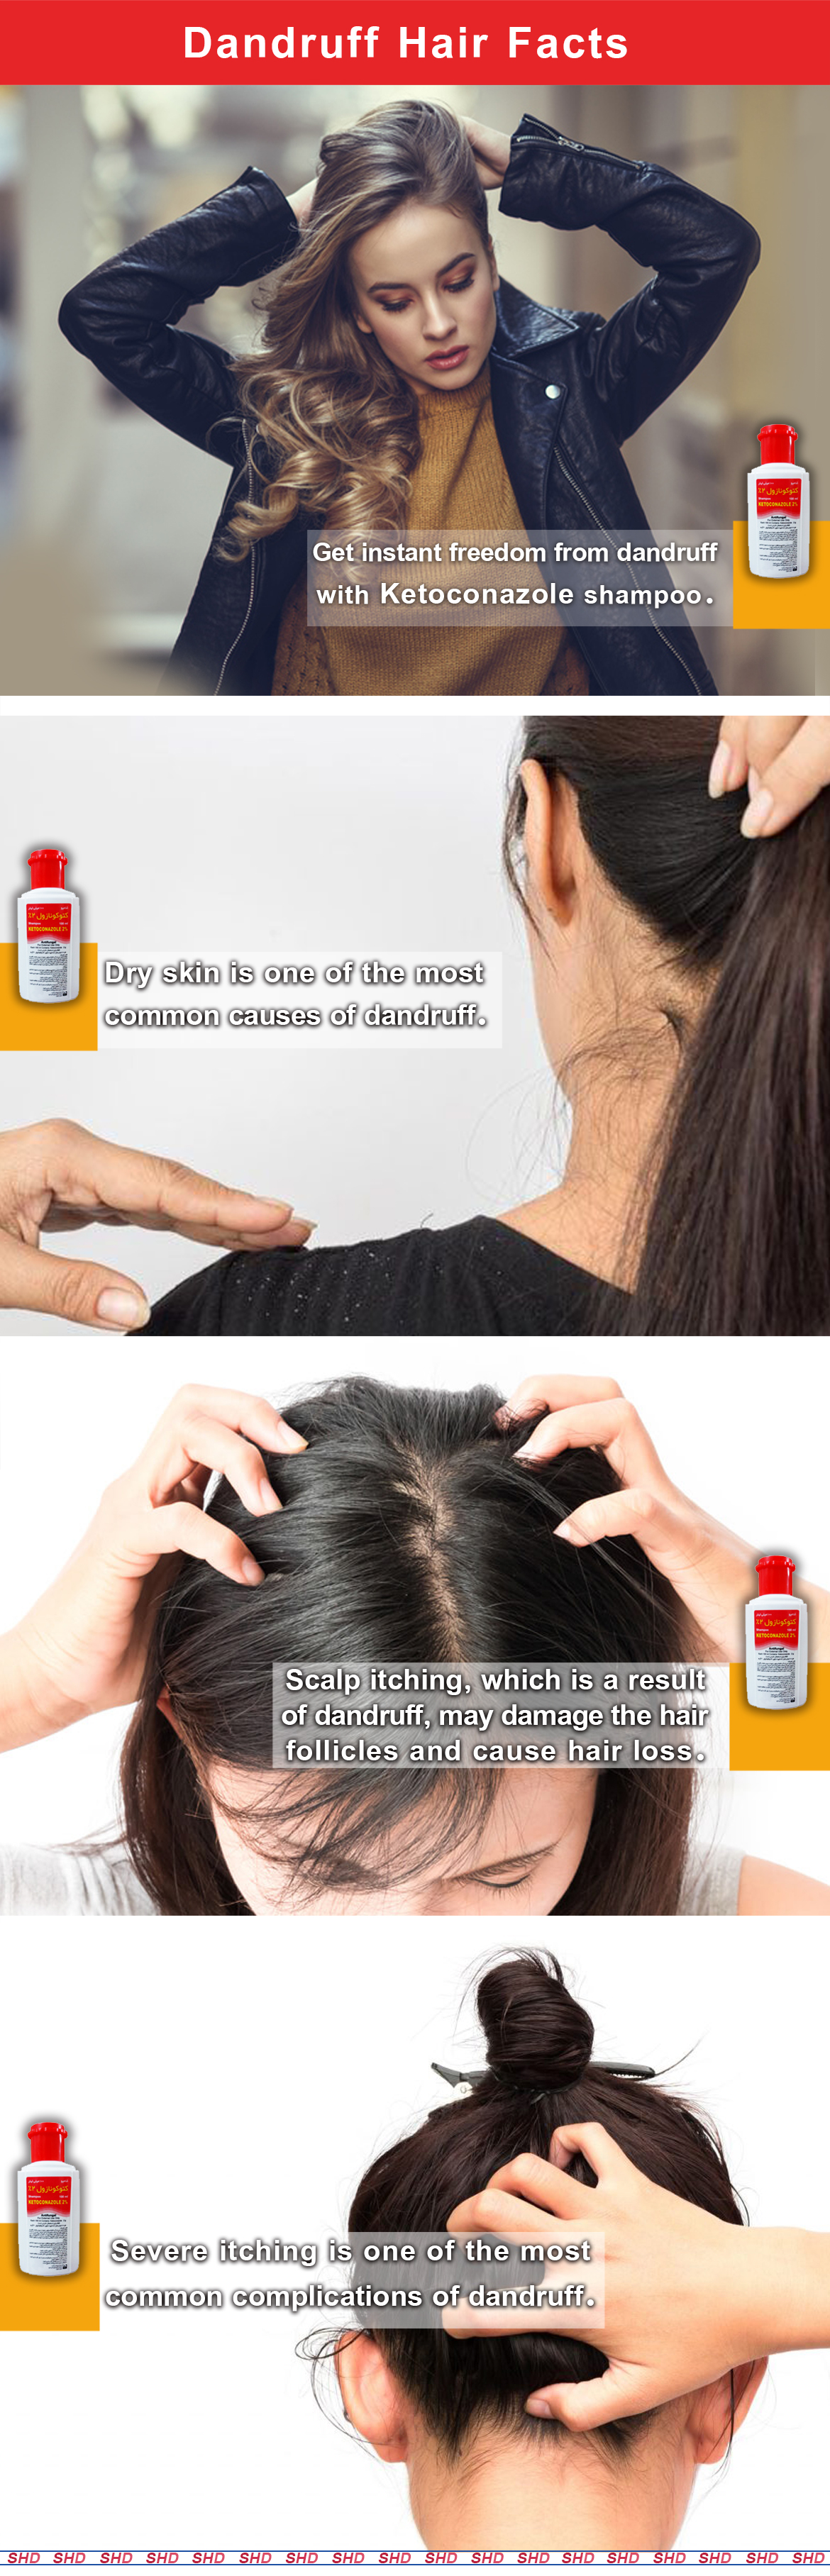 Get instant freedom from dandruff with Ketoconazole shampoo